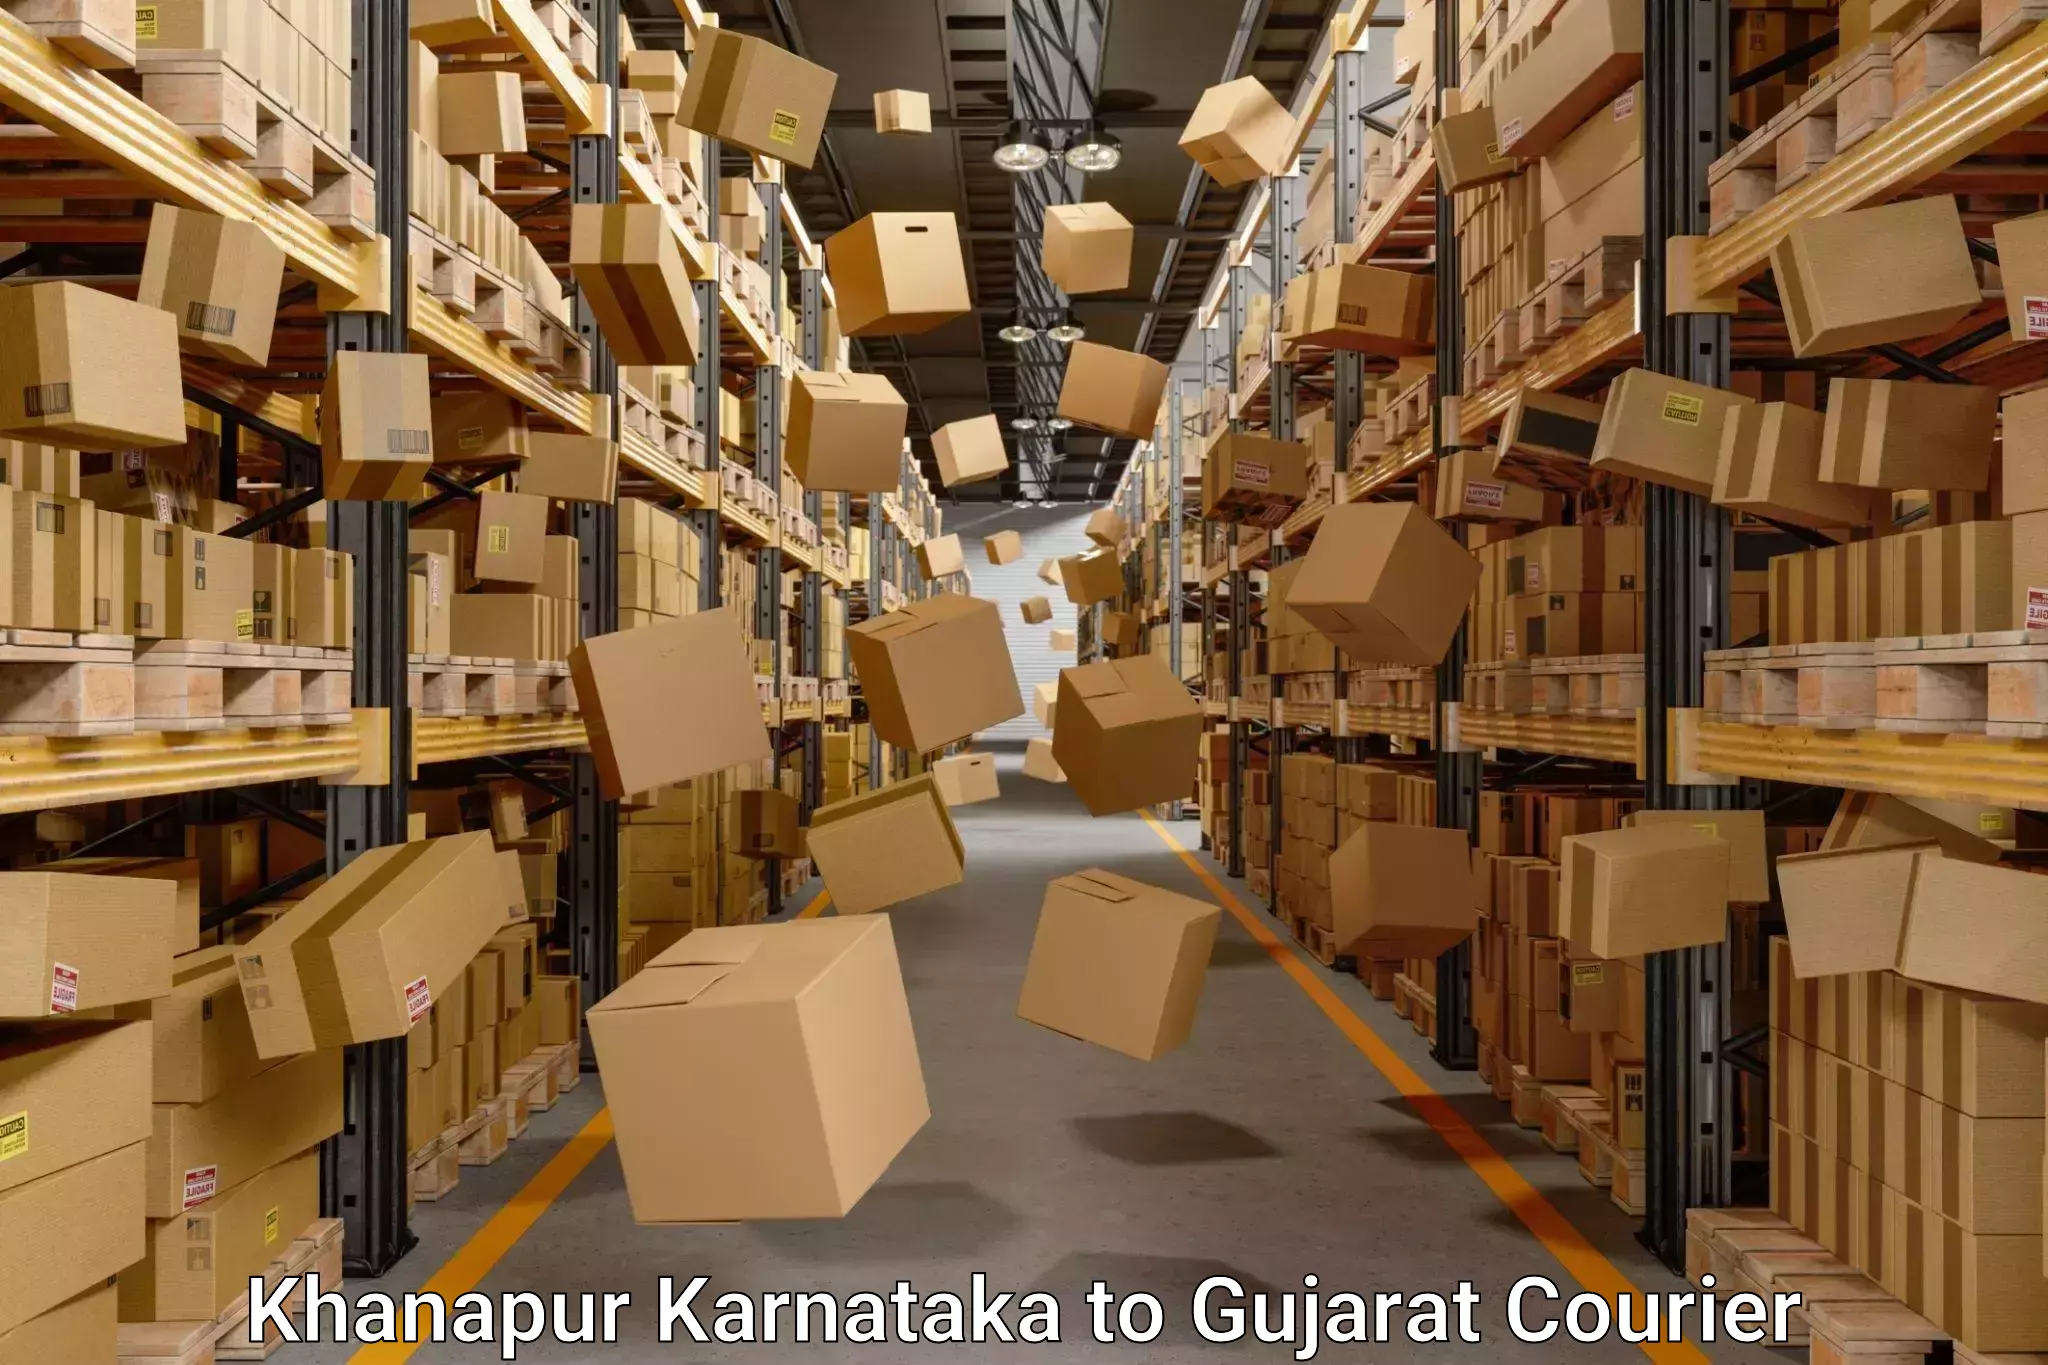 Efficient moving company Khanapur Karnataka to Gujarat